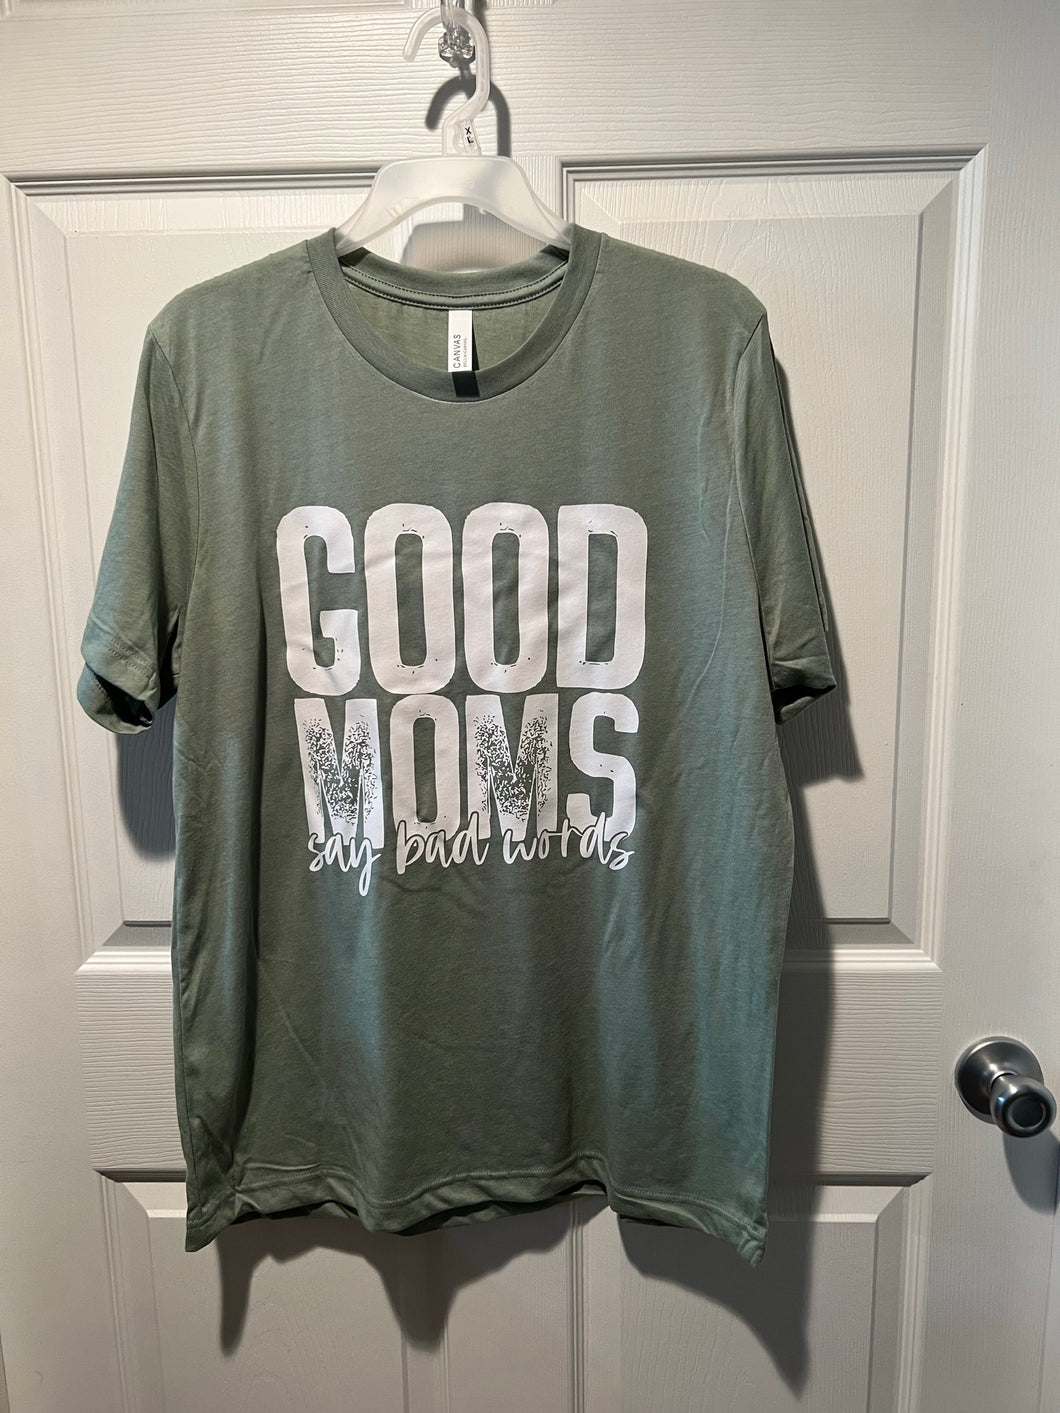 Good Moms Say Bad Words Shirt - Size Large